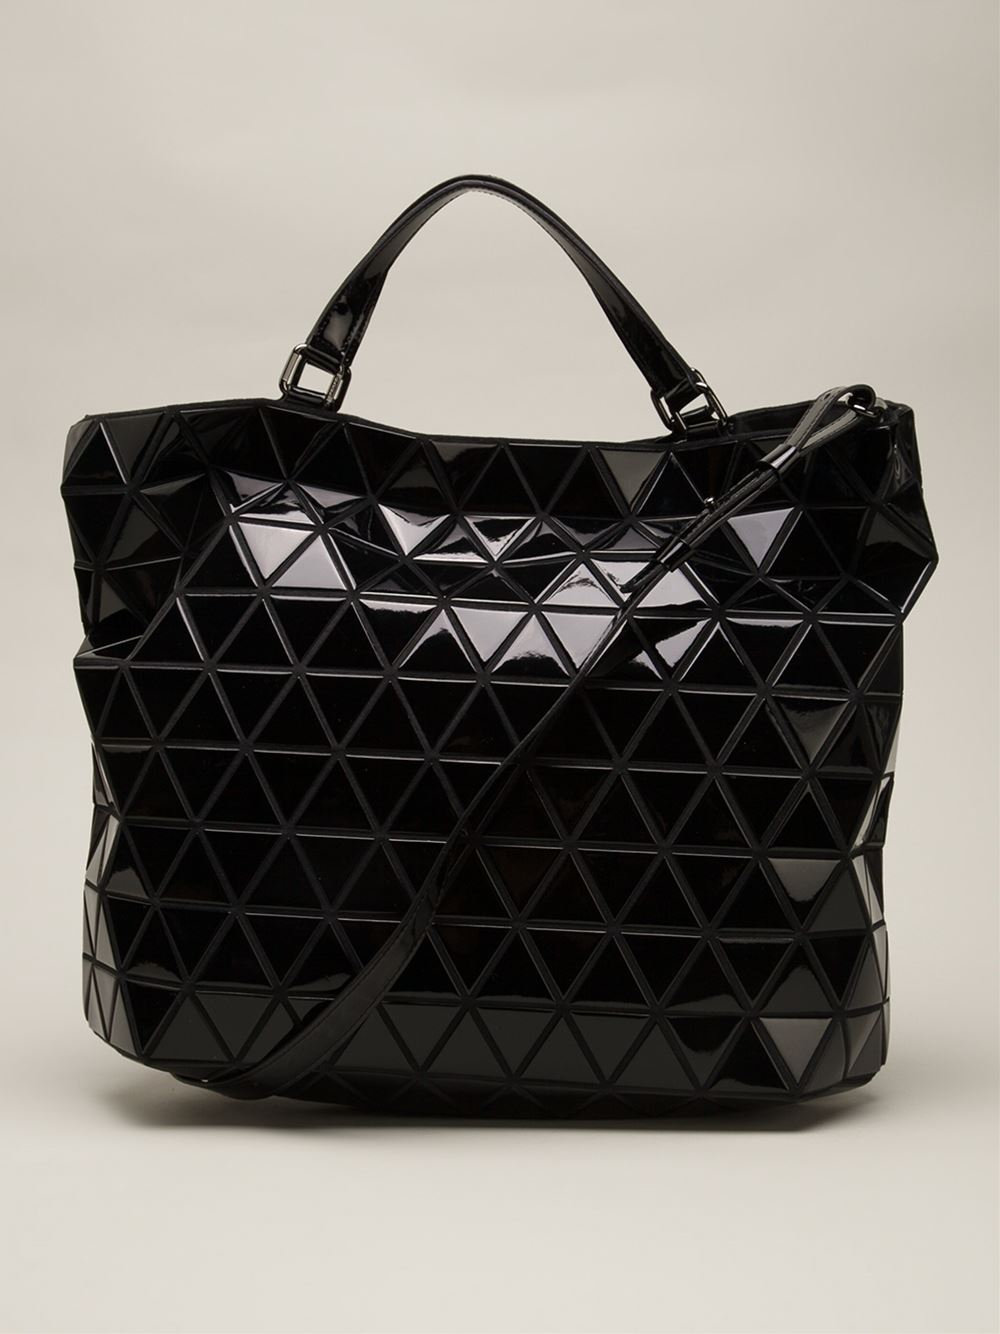 Lyst - Bao Bao Issey Miyake Geometric Cross Body Bag in Black